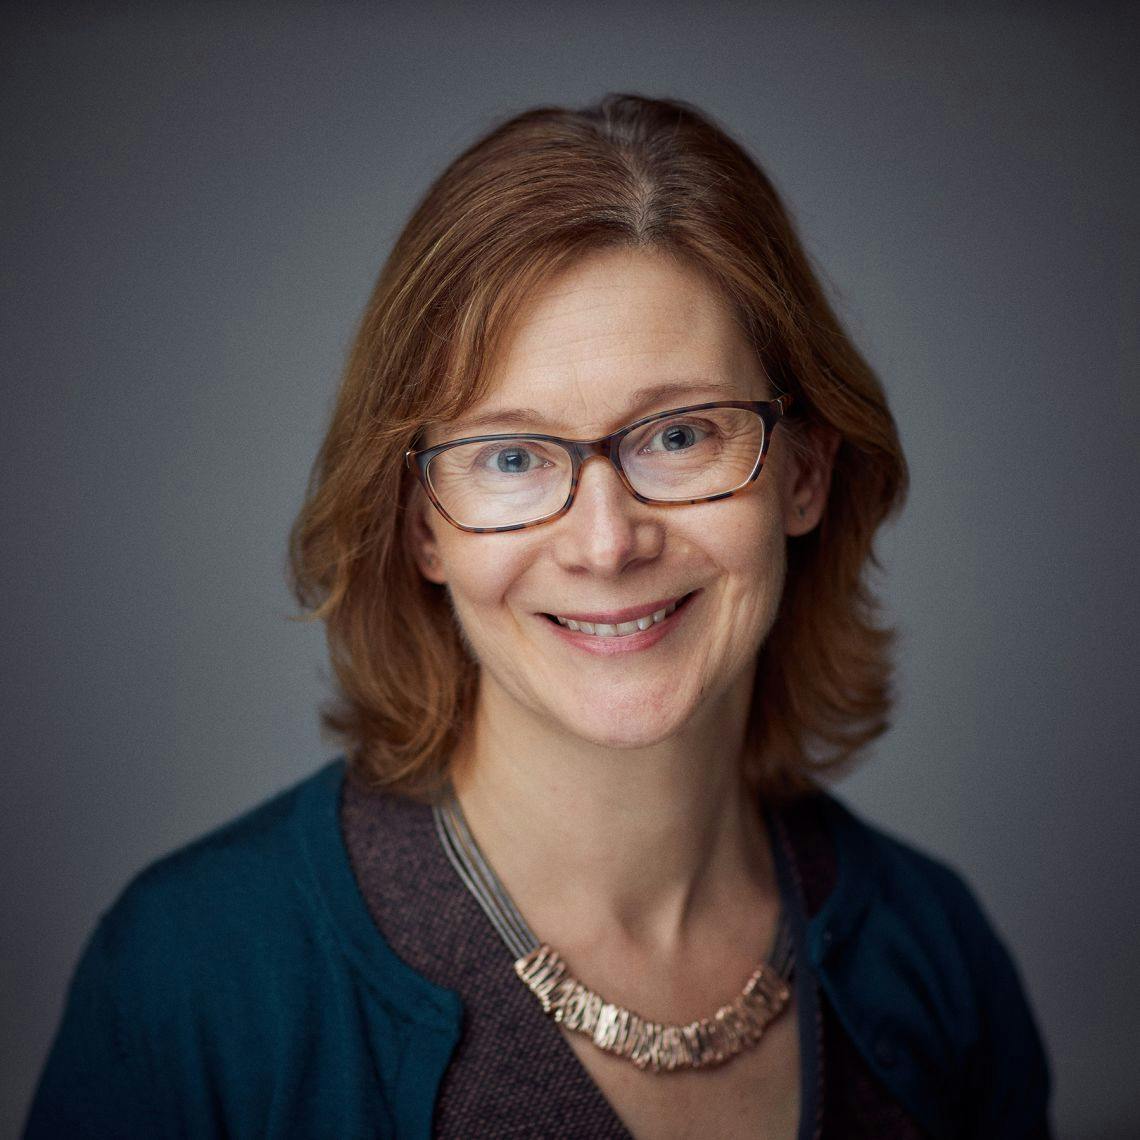 Fiona Watt, MBBS, PhD, FRCP